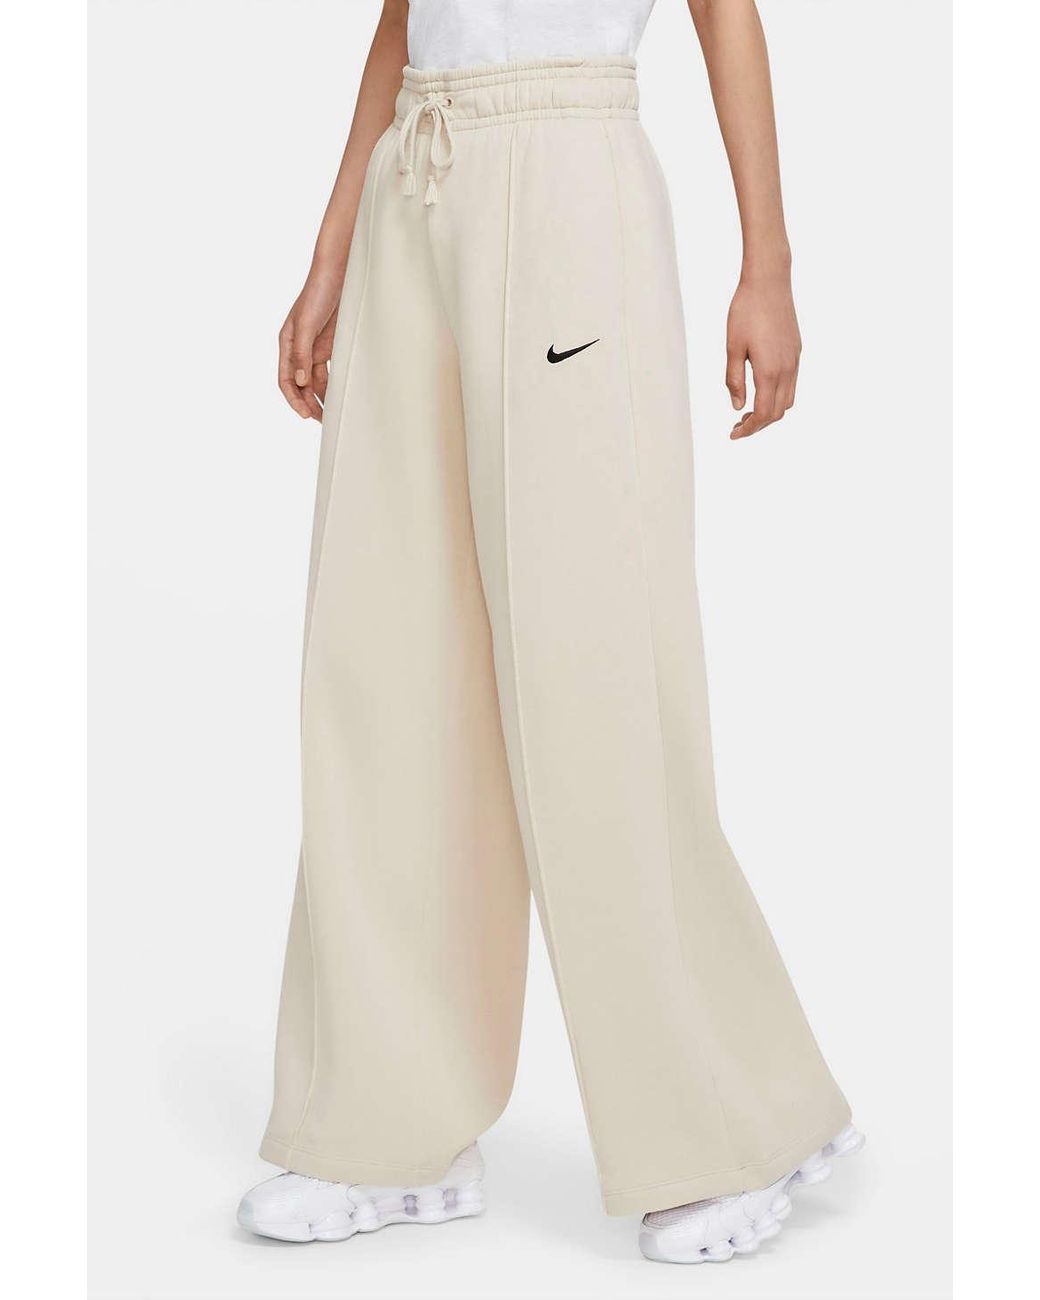 Nike Sportswear Trend Essential Fleece Pant in Natural | Lyst Canada